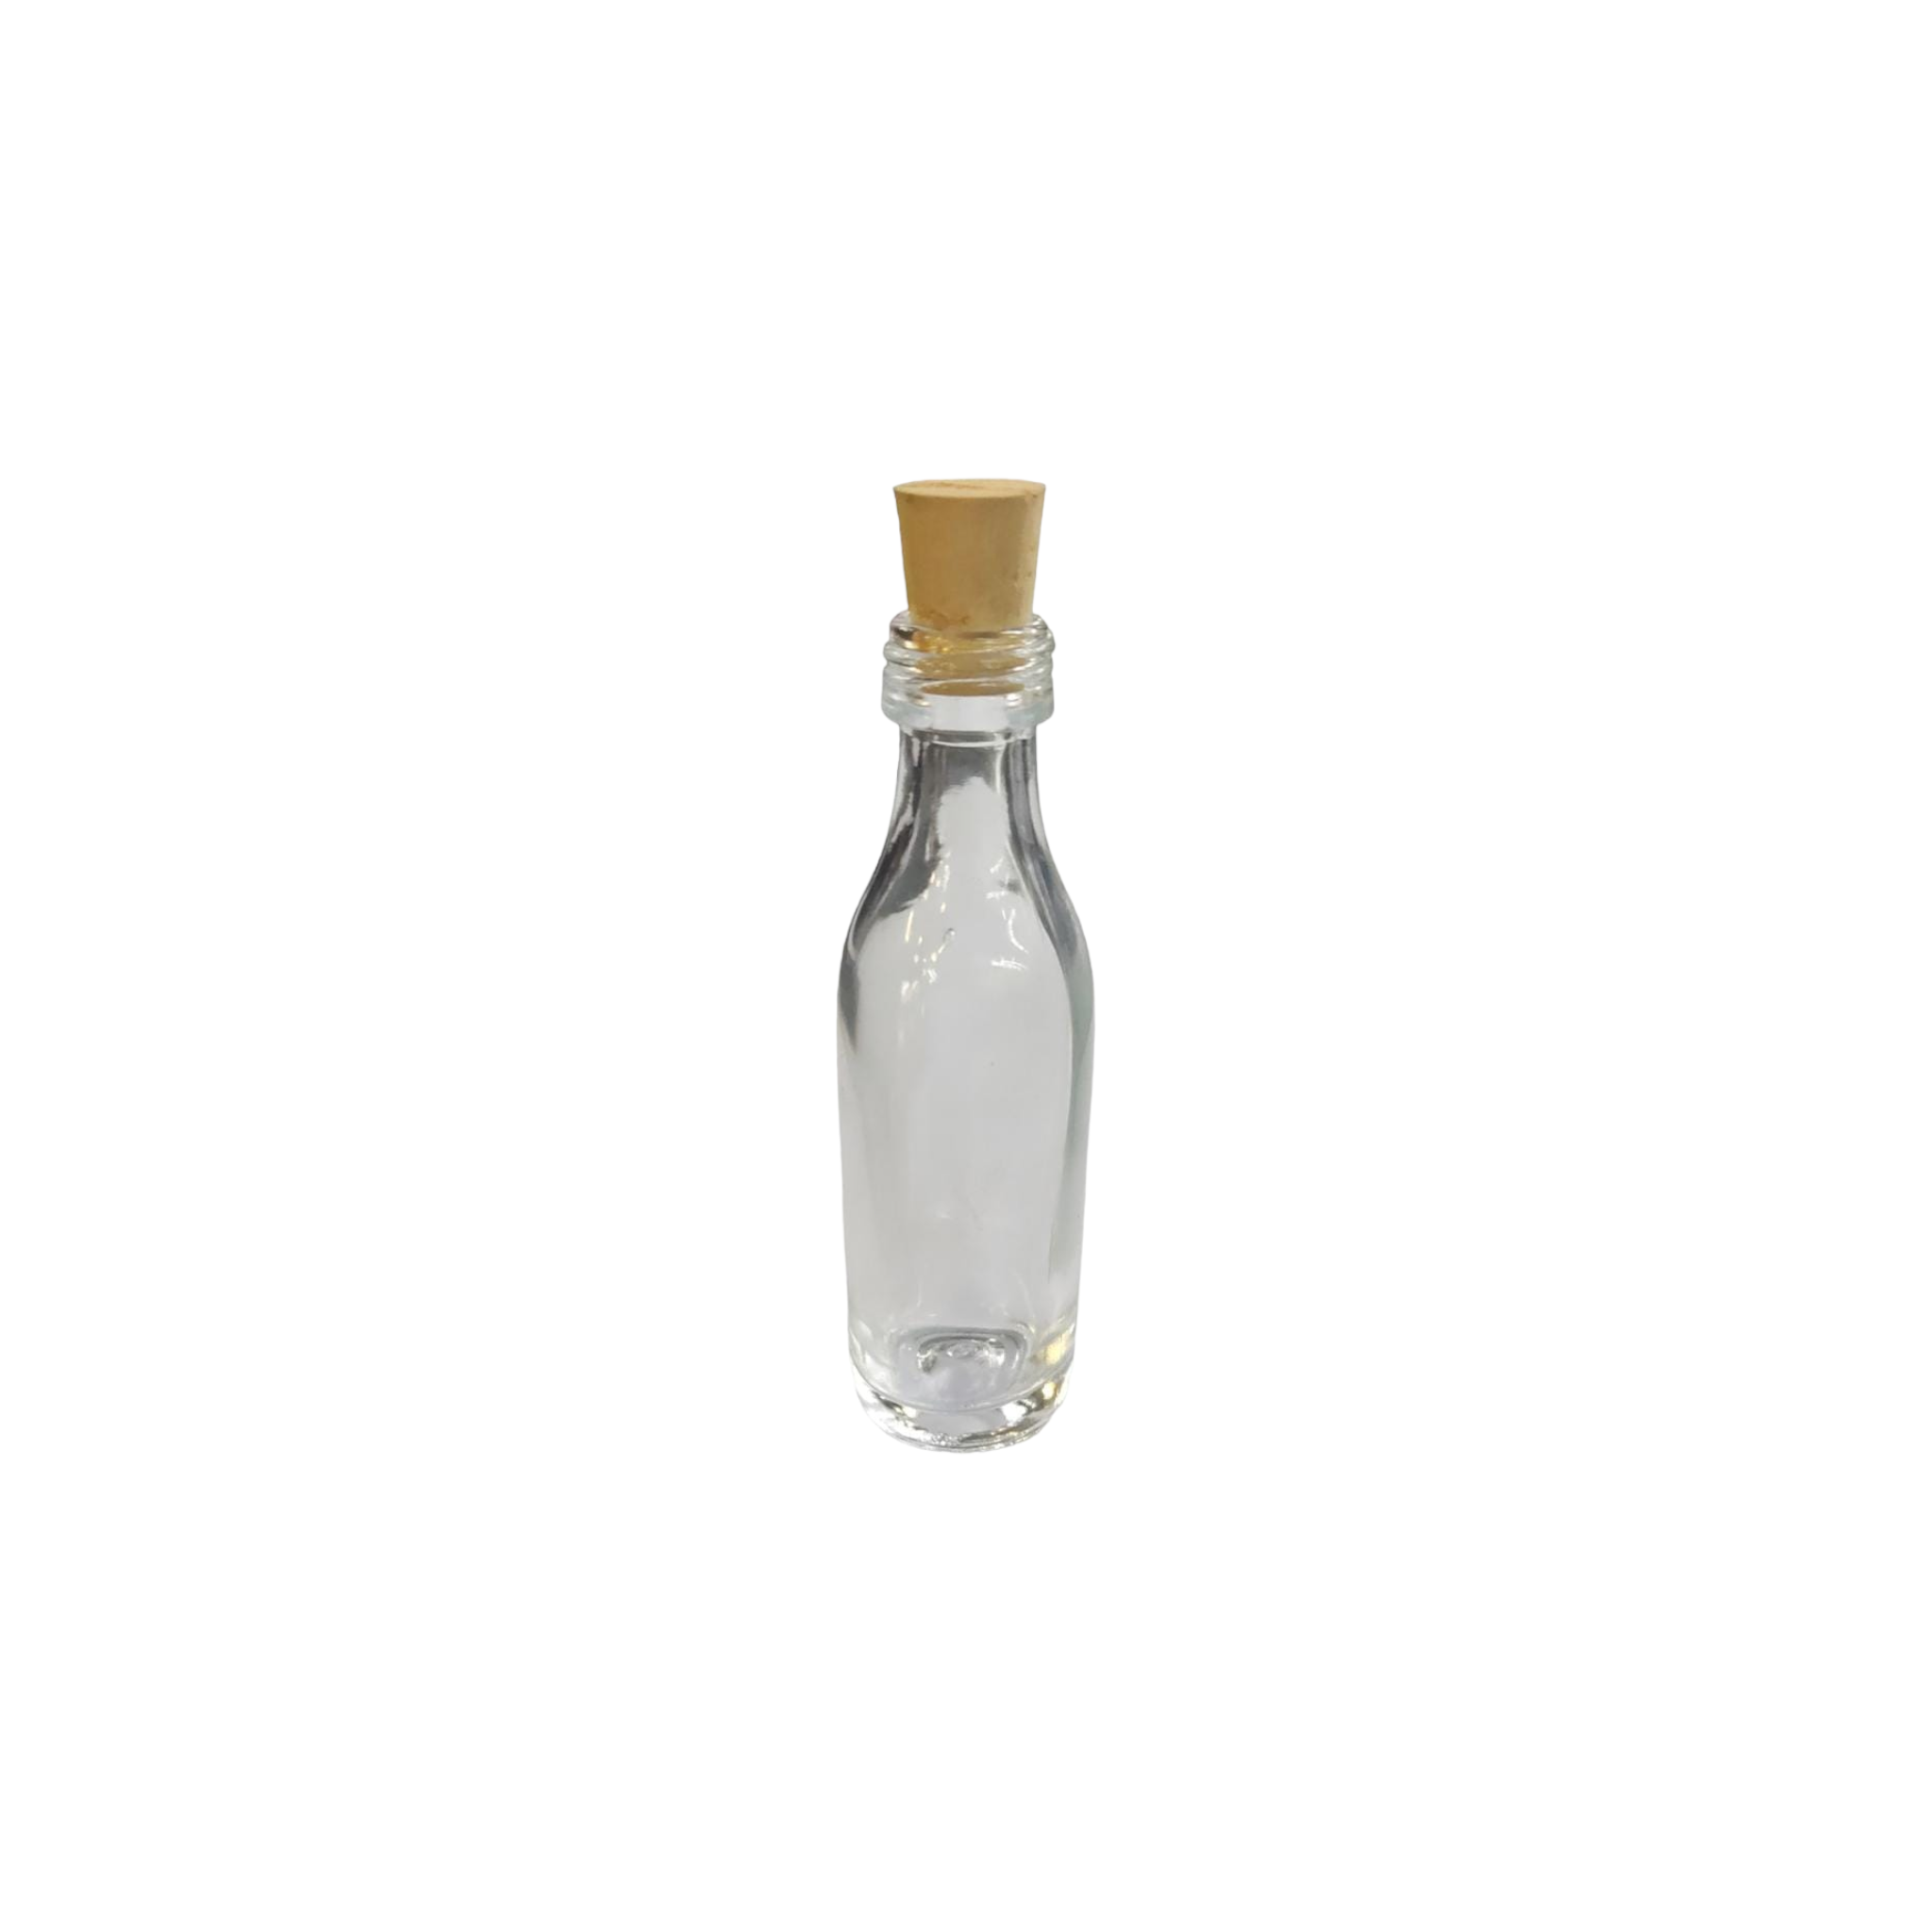 Consol 50ml Glass Mini Spirit Bottle with Cork Lid